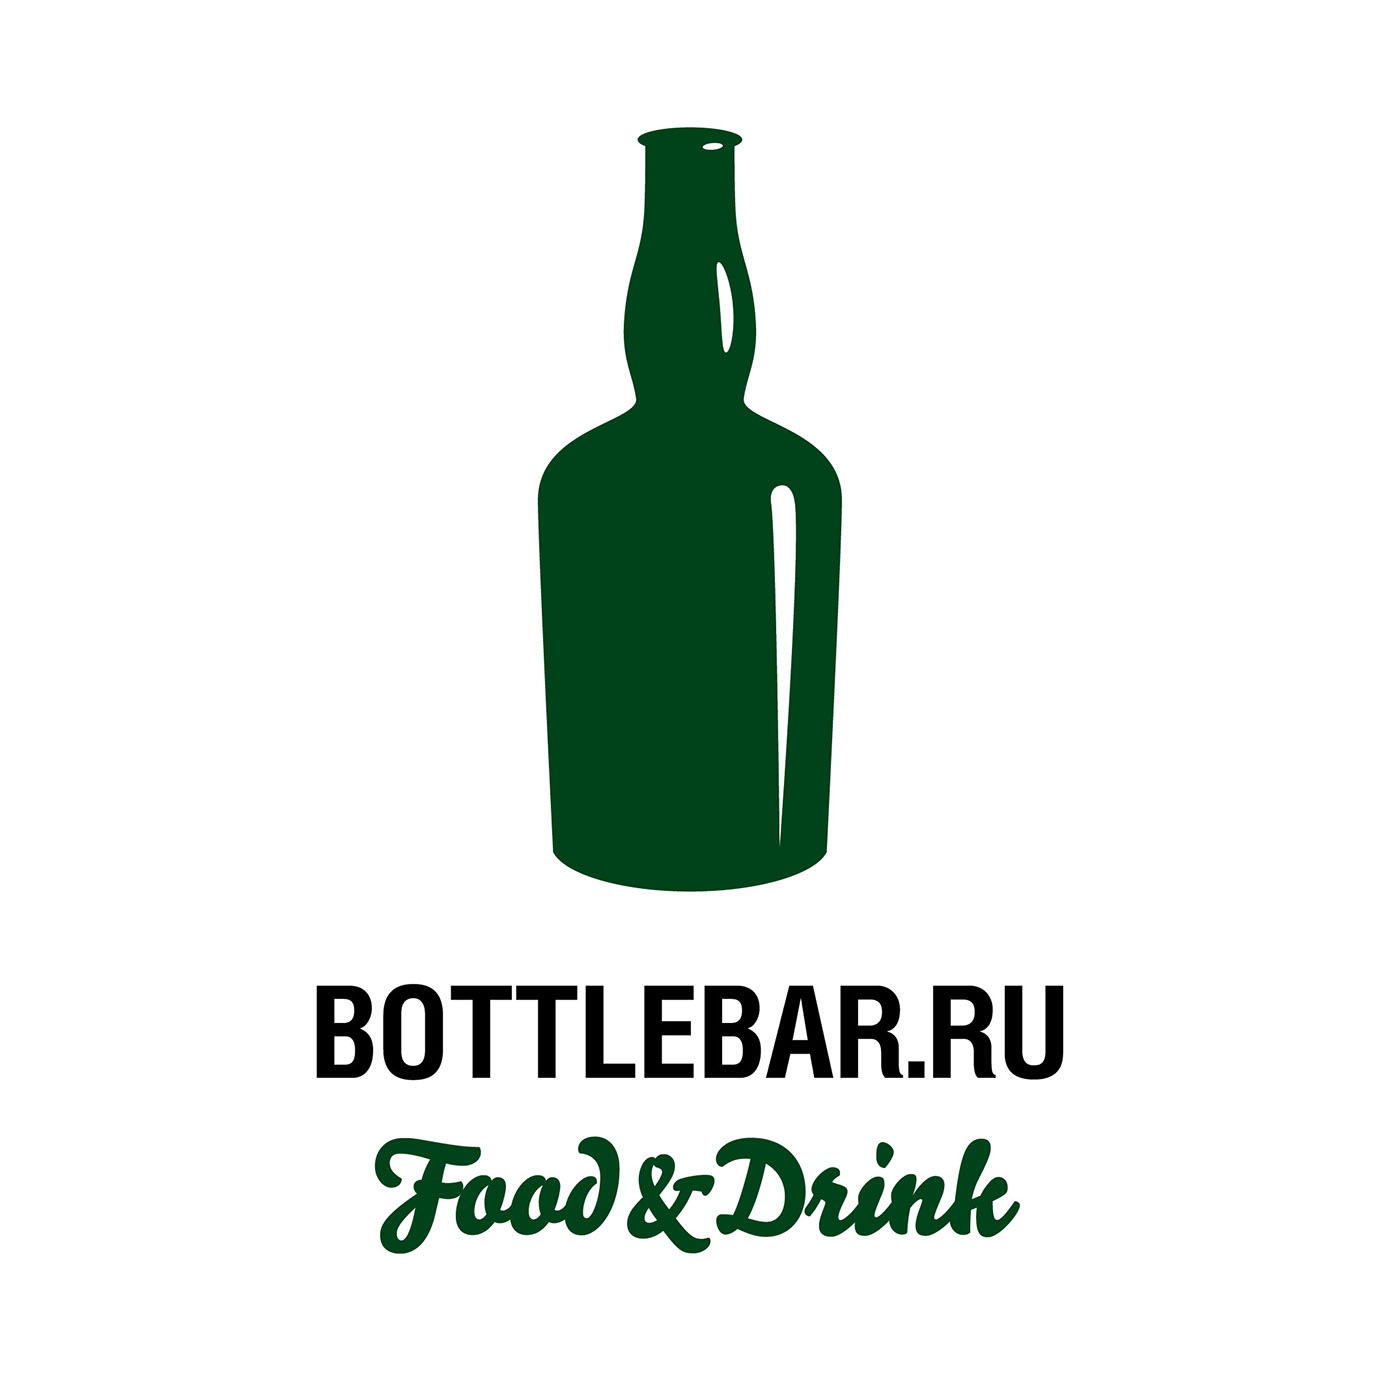 Bottle Bar Identity on Behance